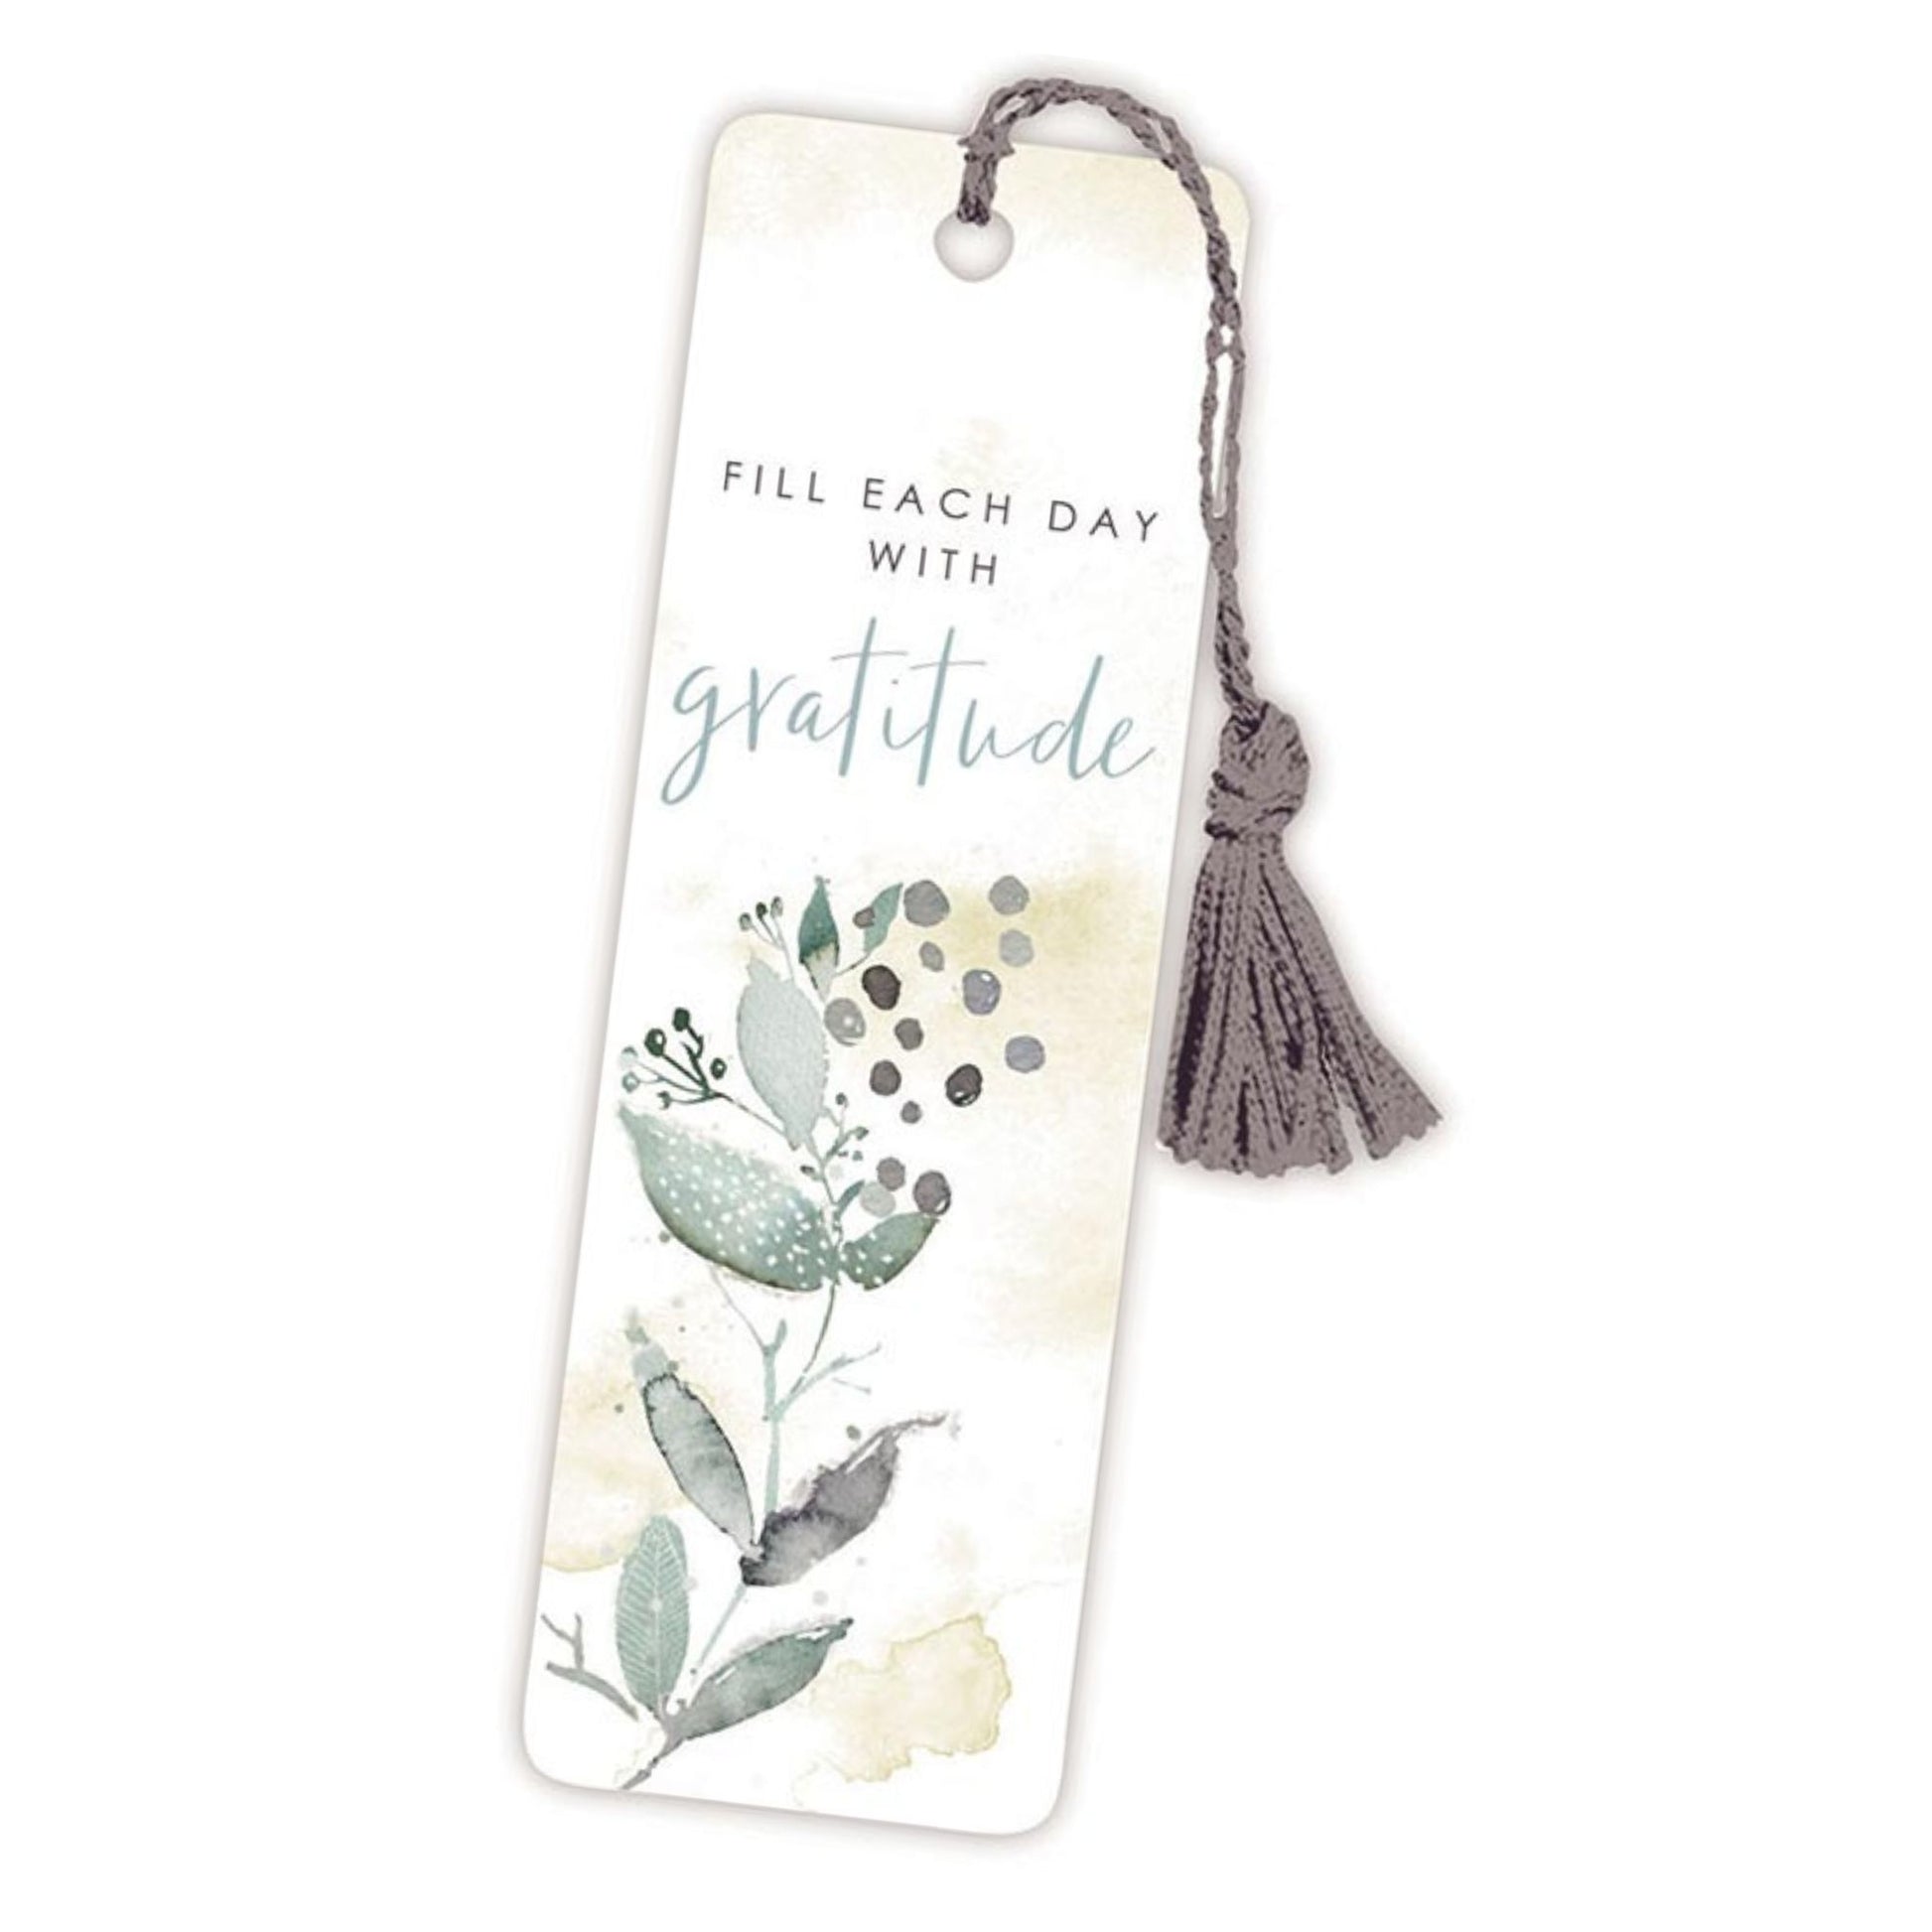 Fill Each Day with Gratitude - Inspirational Bookmark and Magnet Set | Inspirational Bookmark Shown | oak7west.com